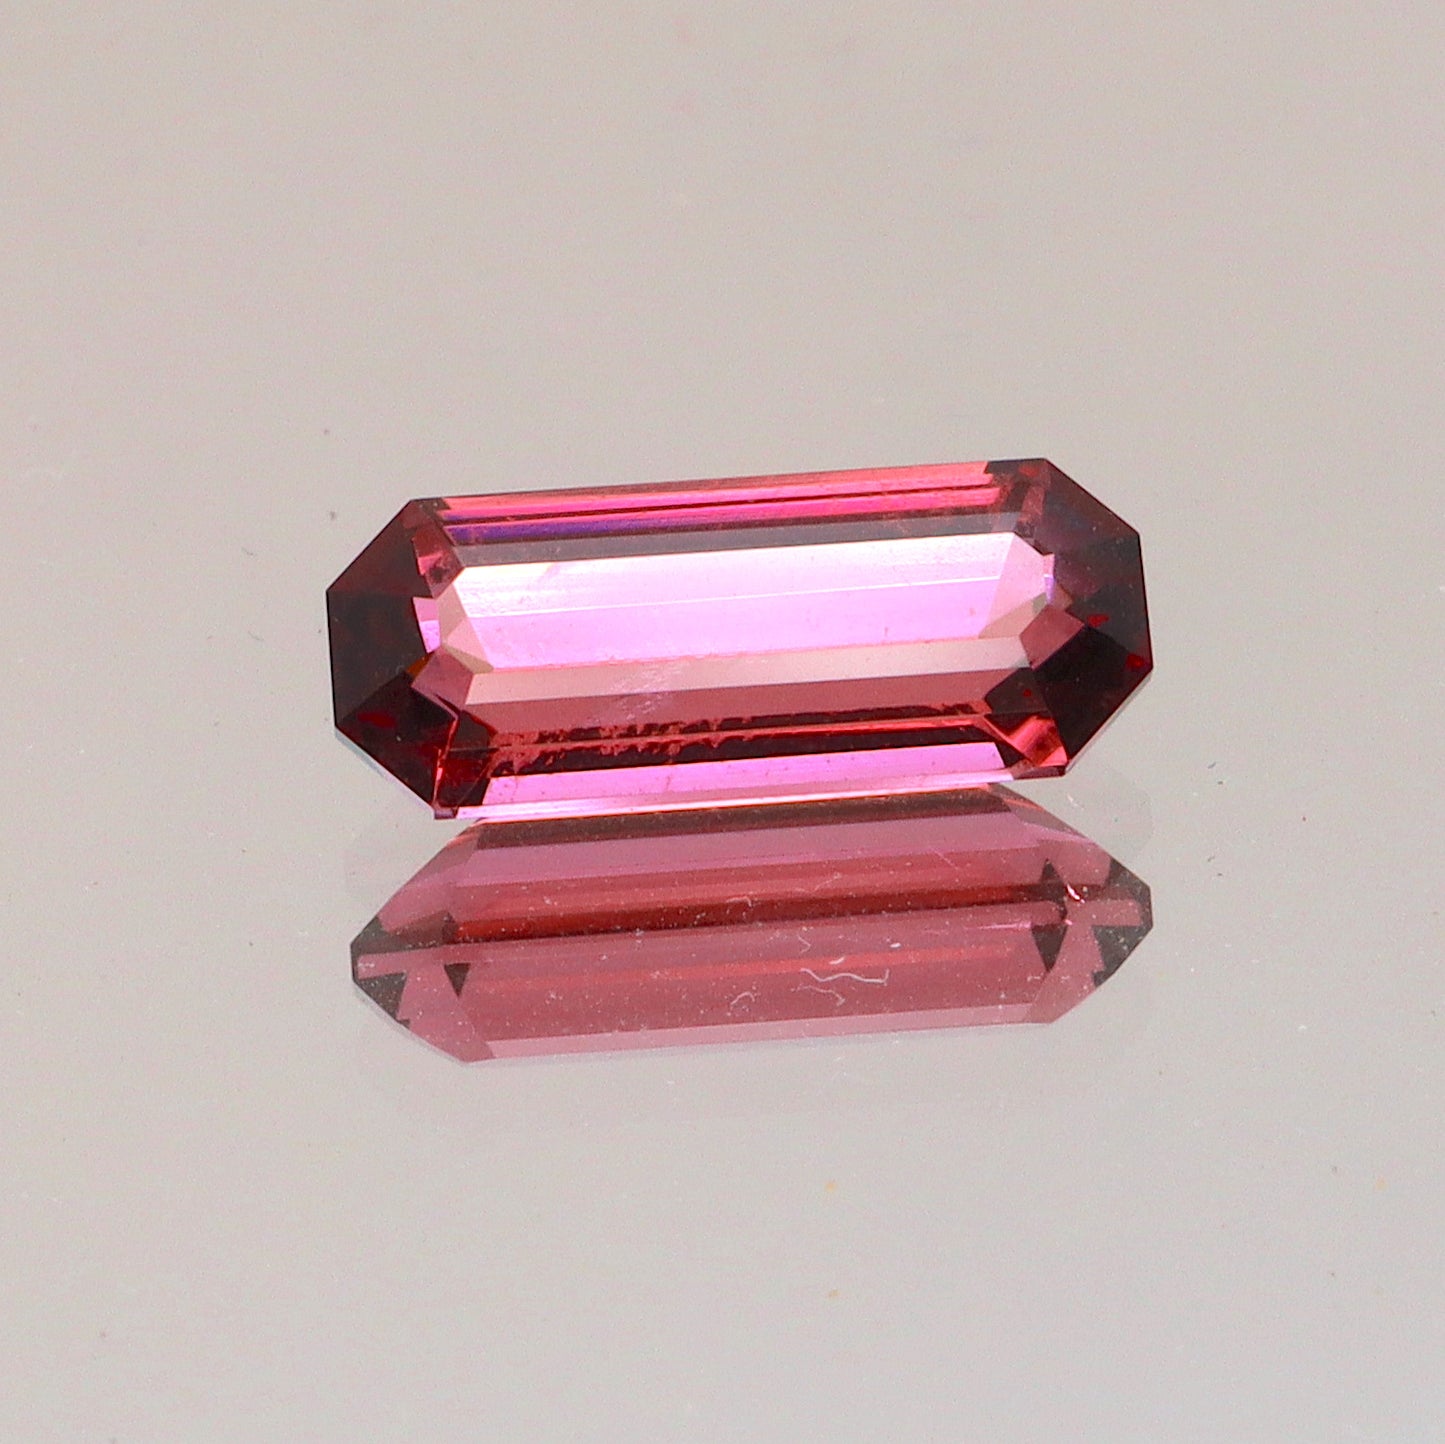 1.89ct Pink Tourmaline  gemstone